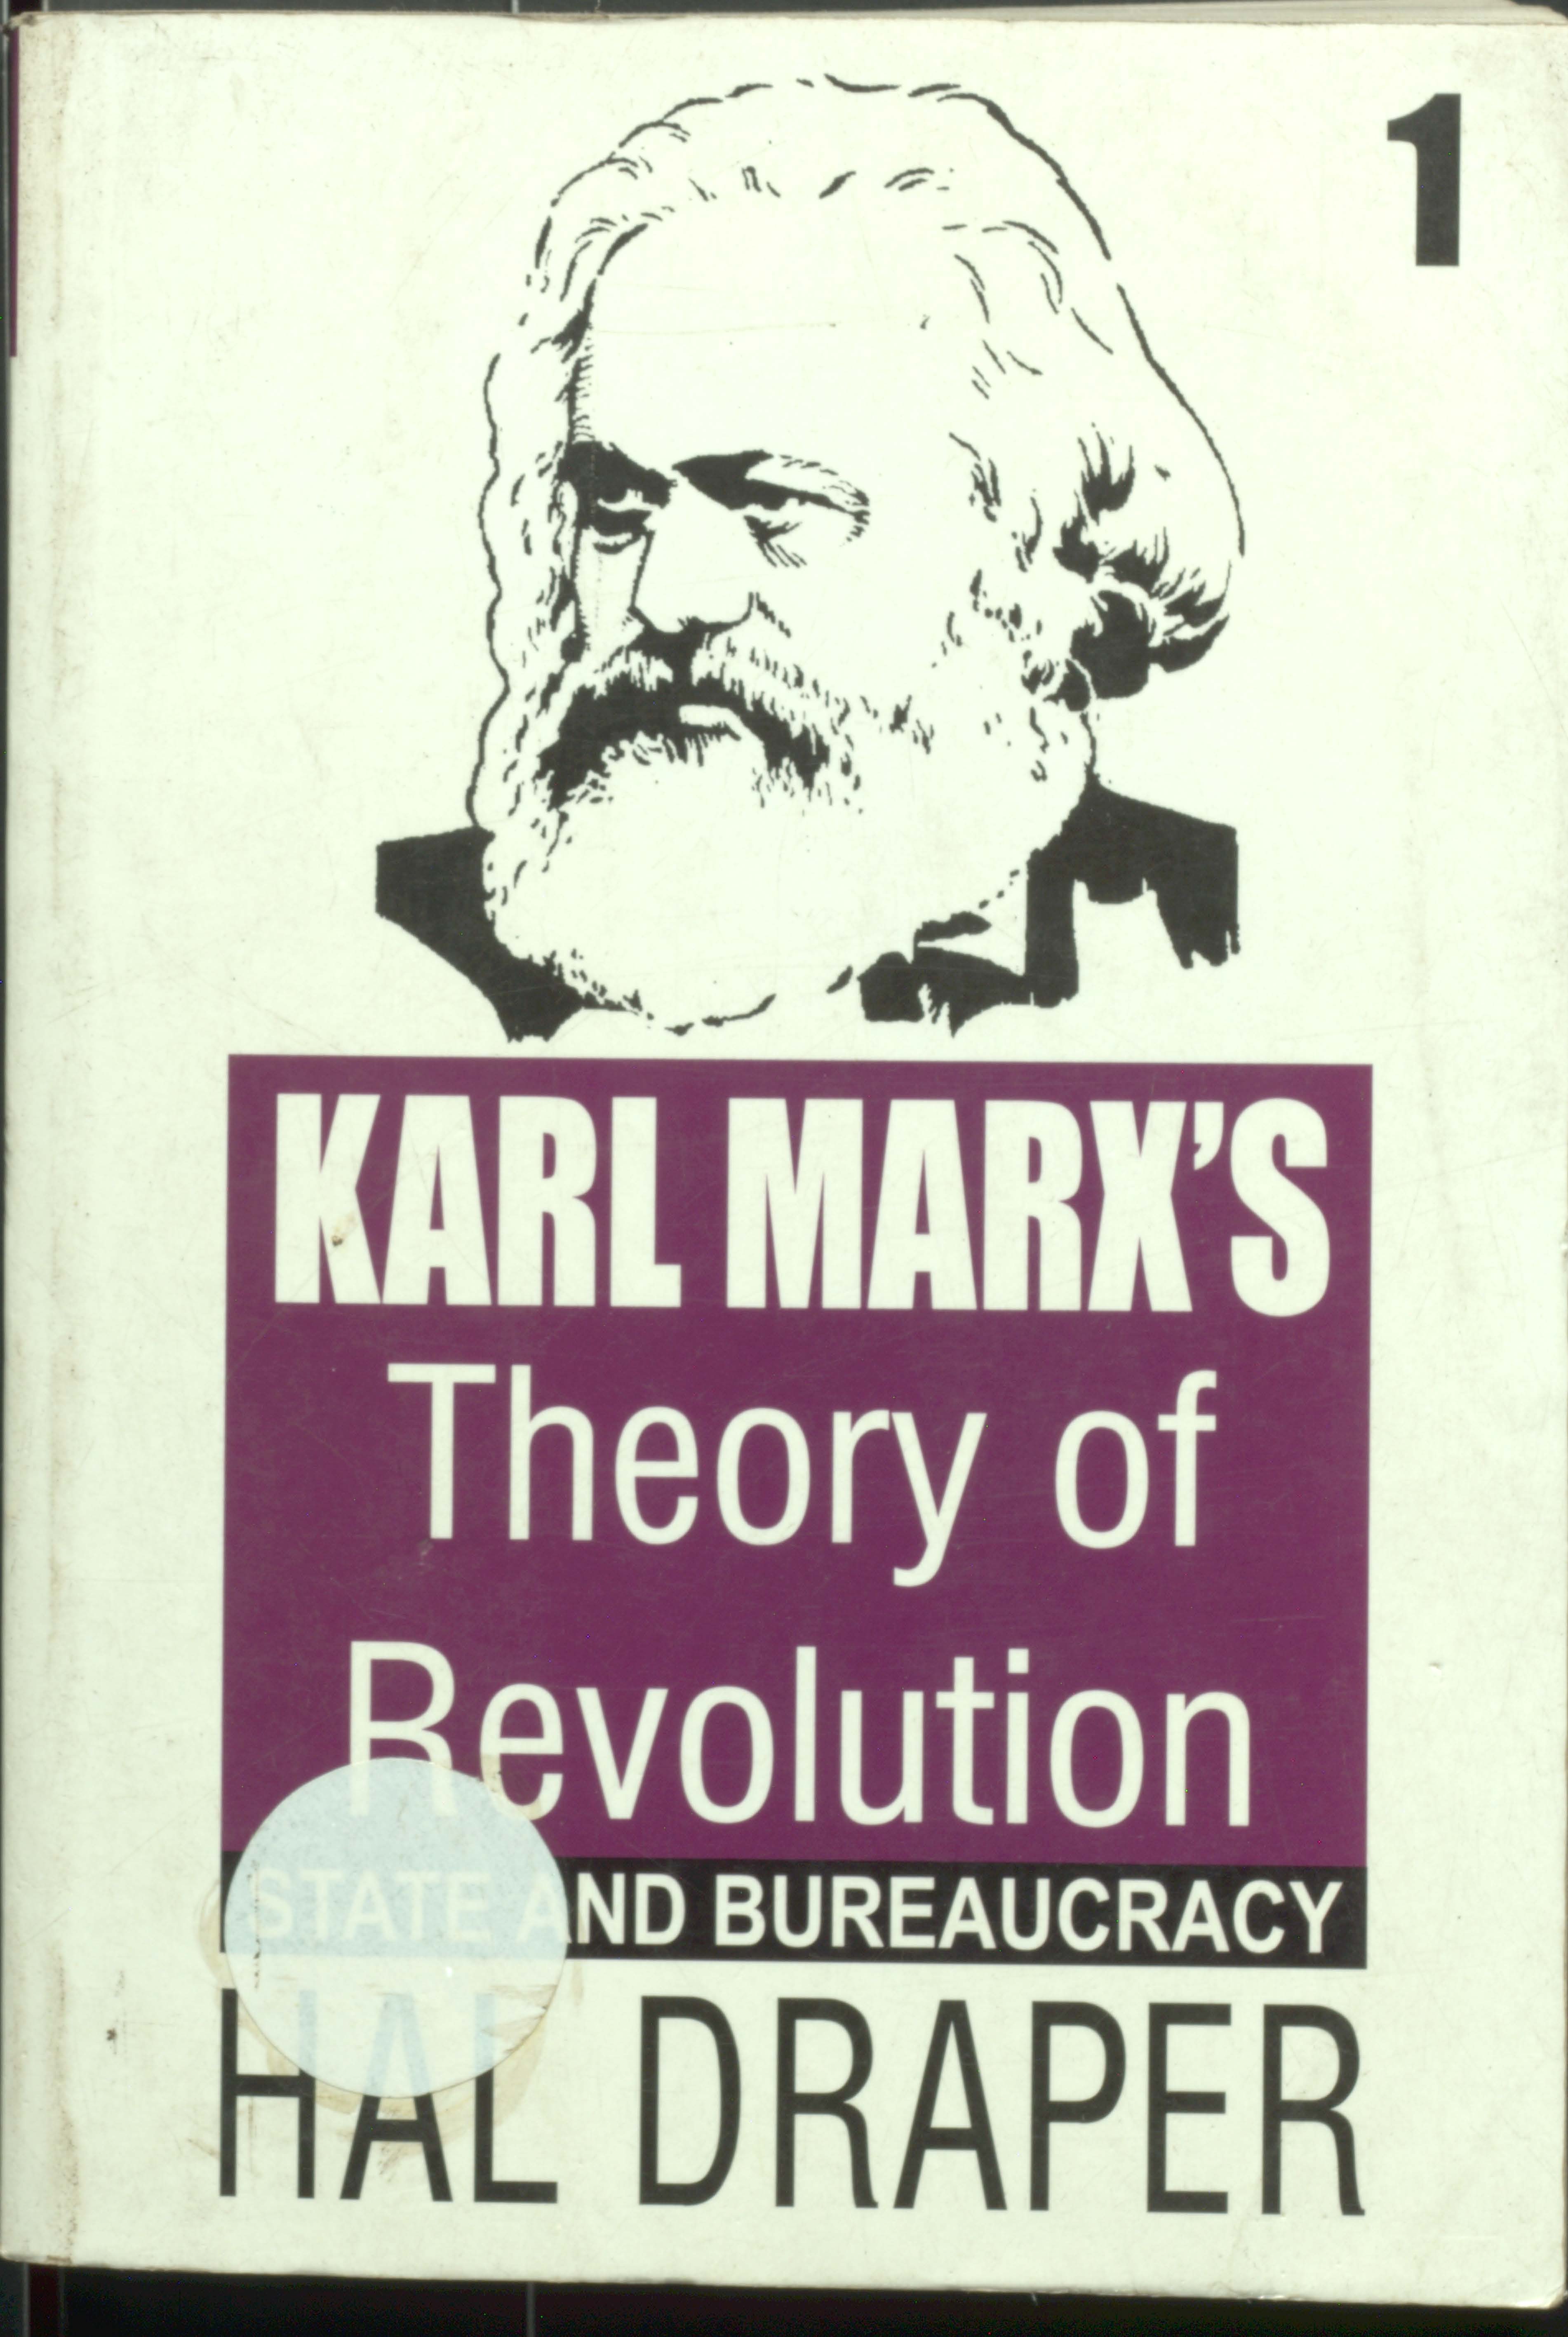 Karl marx's theory of revolution volume-1 (state and bureaveracy)